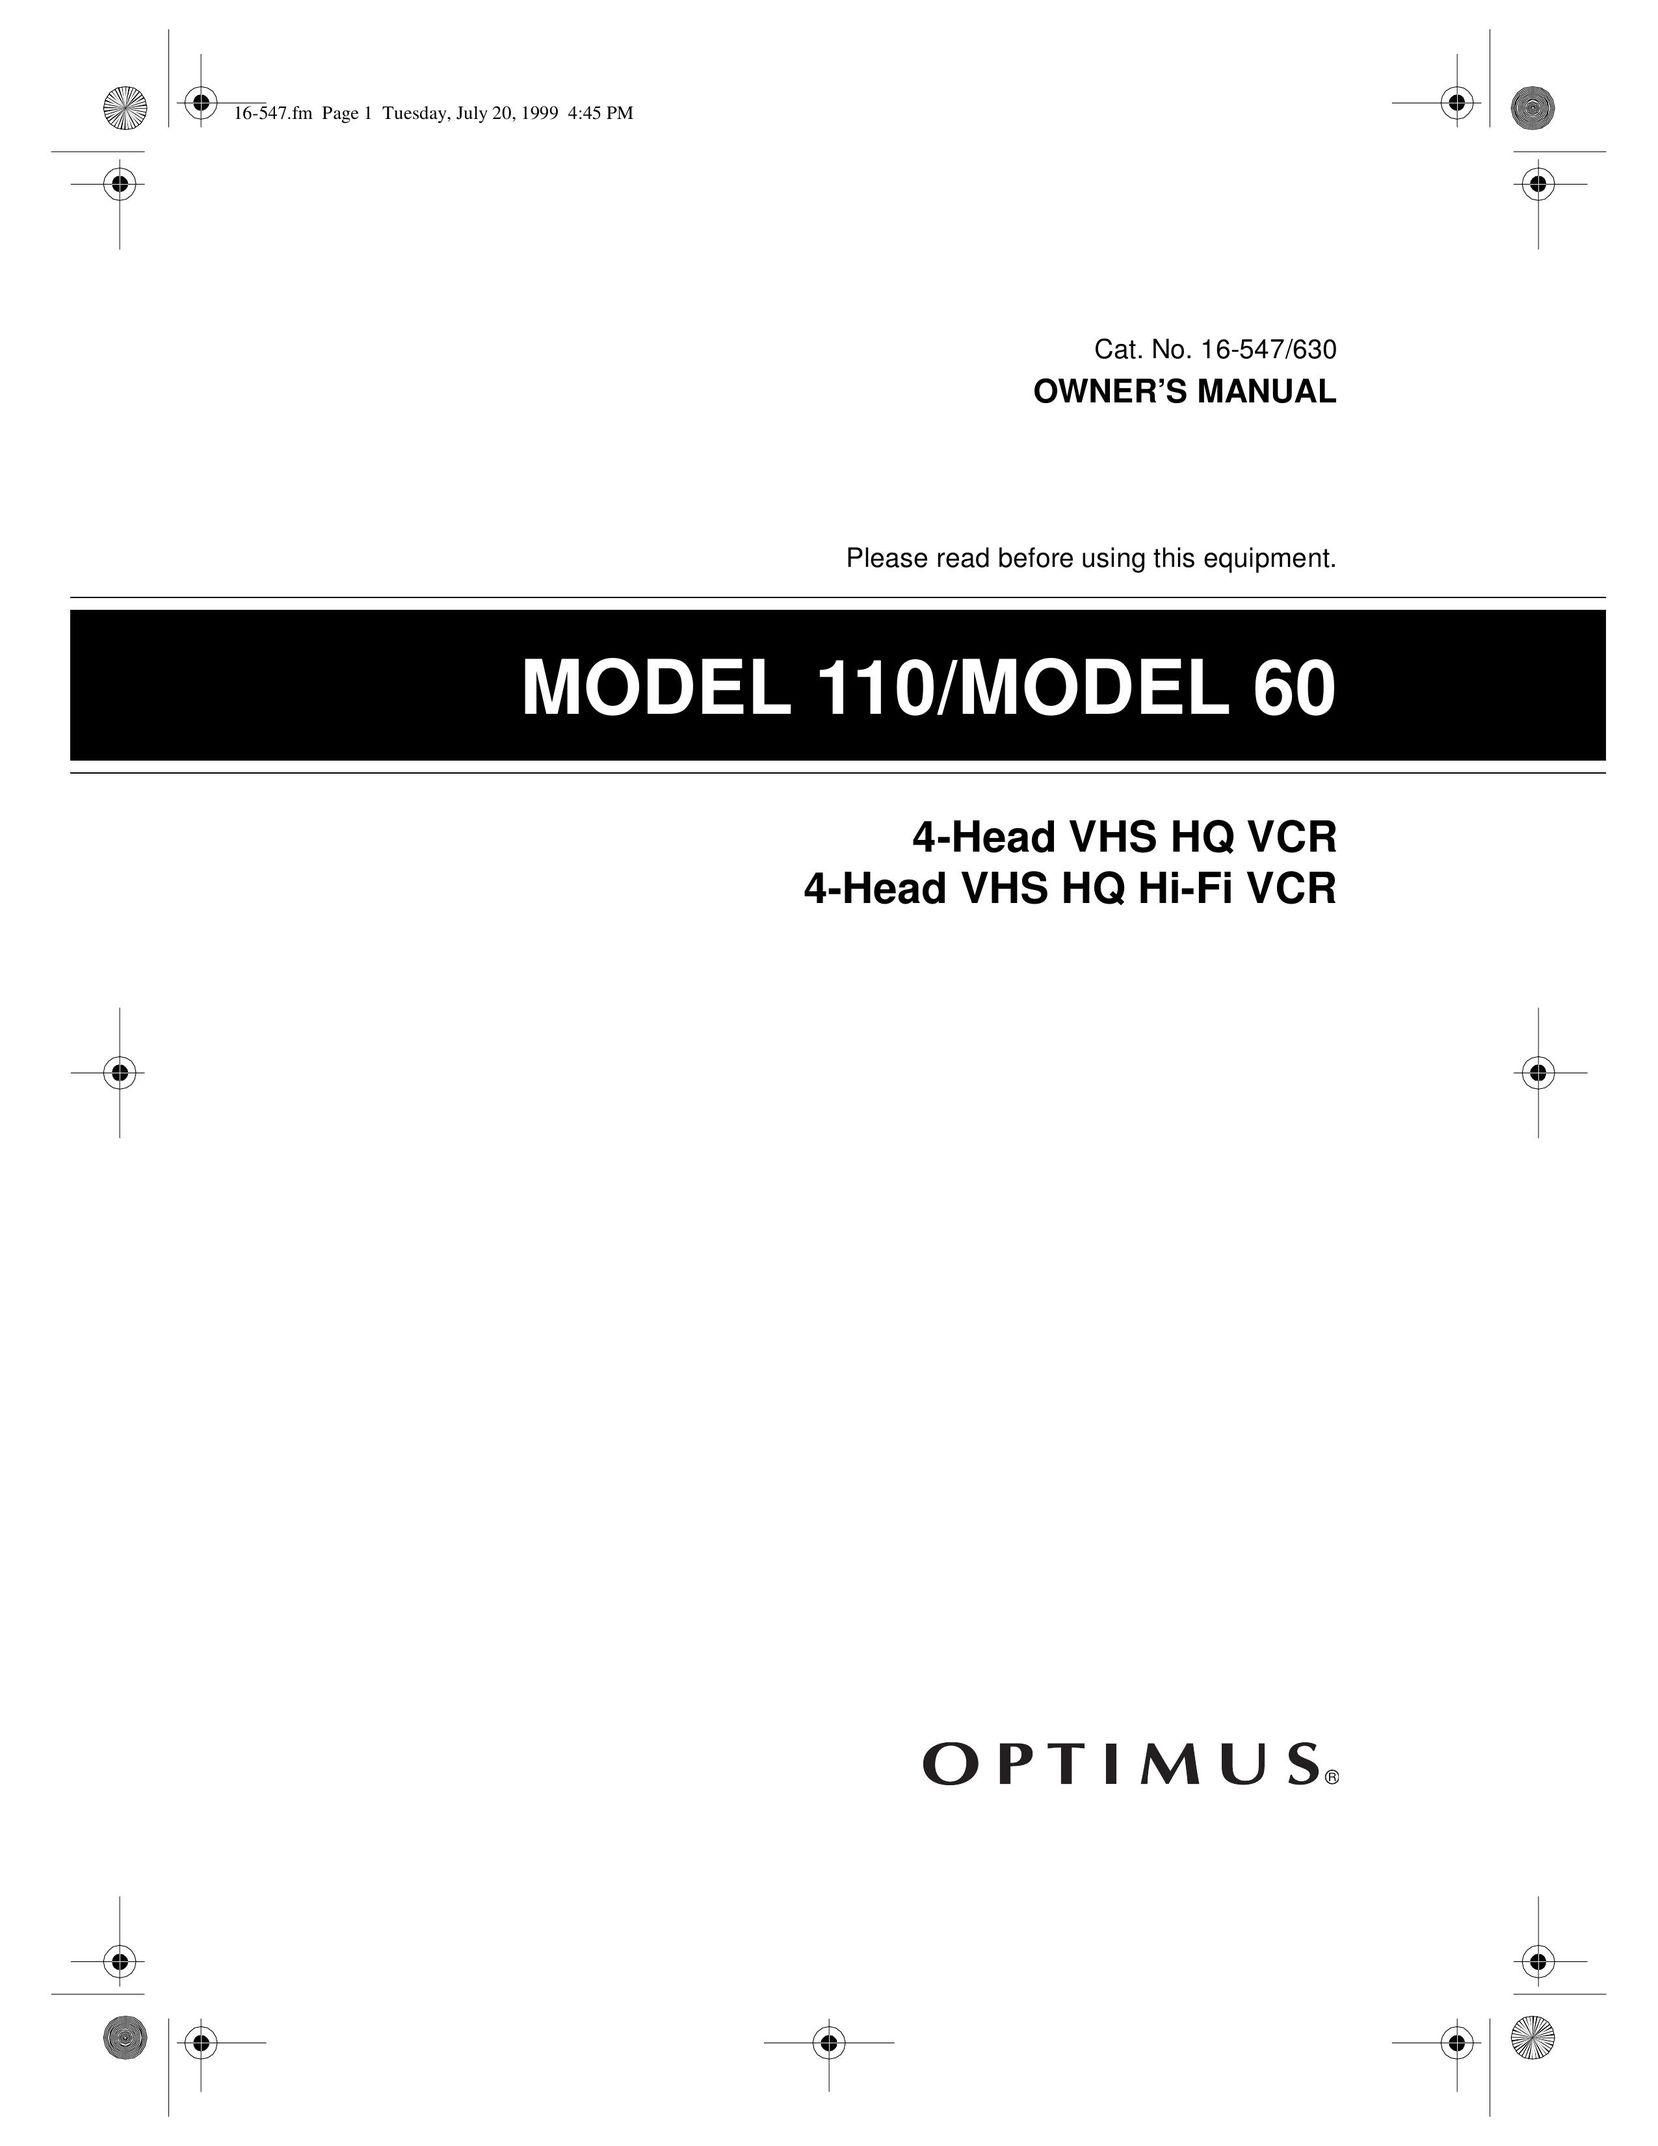 Optimus - Katadyn Products Inc. MODEL 110/MODEL 60 VCR User Manual